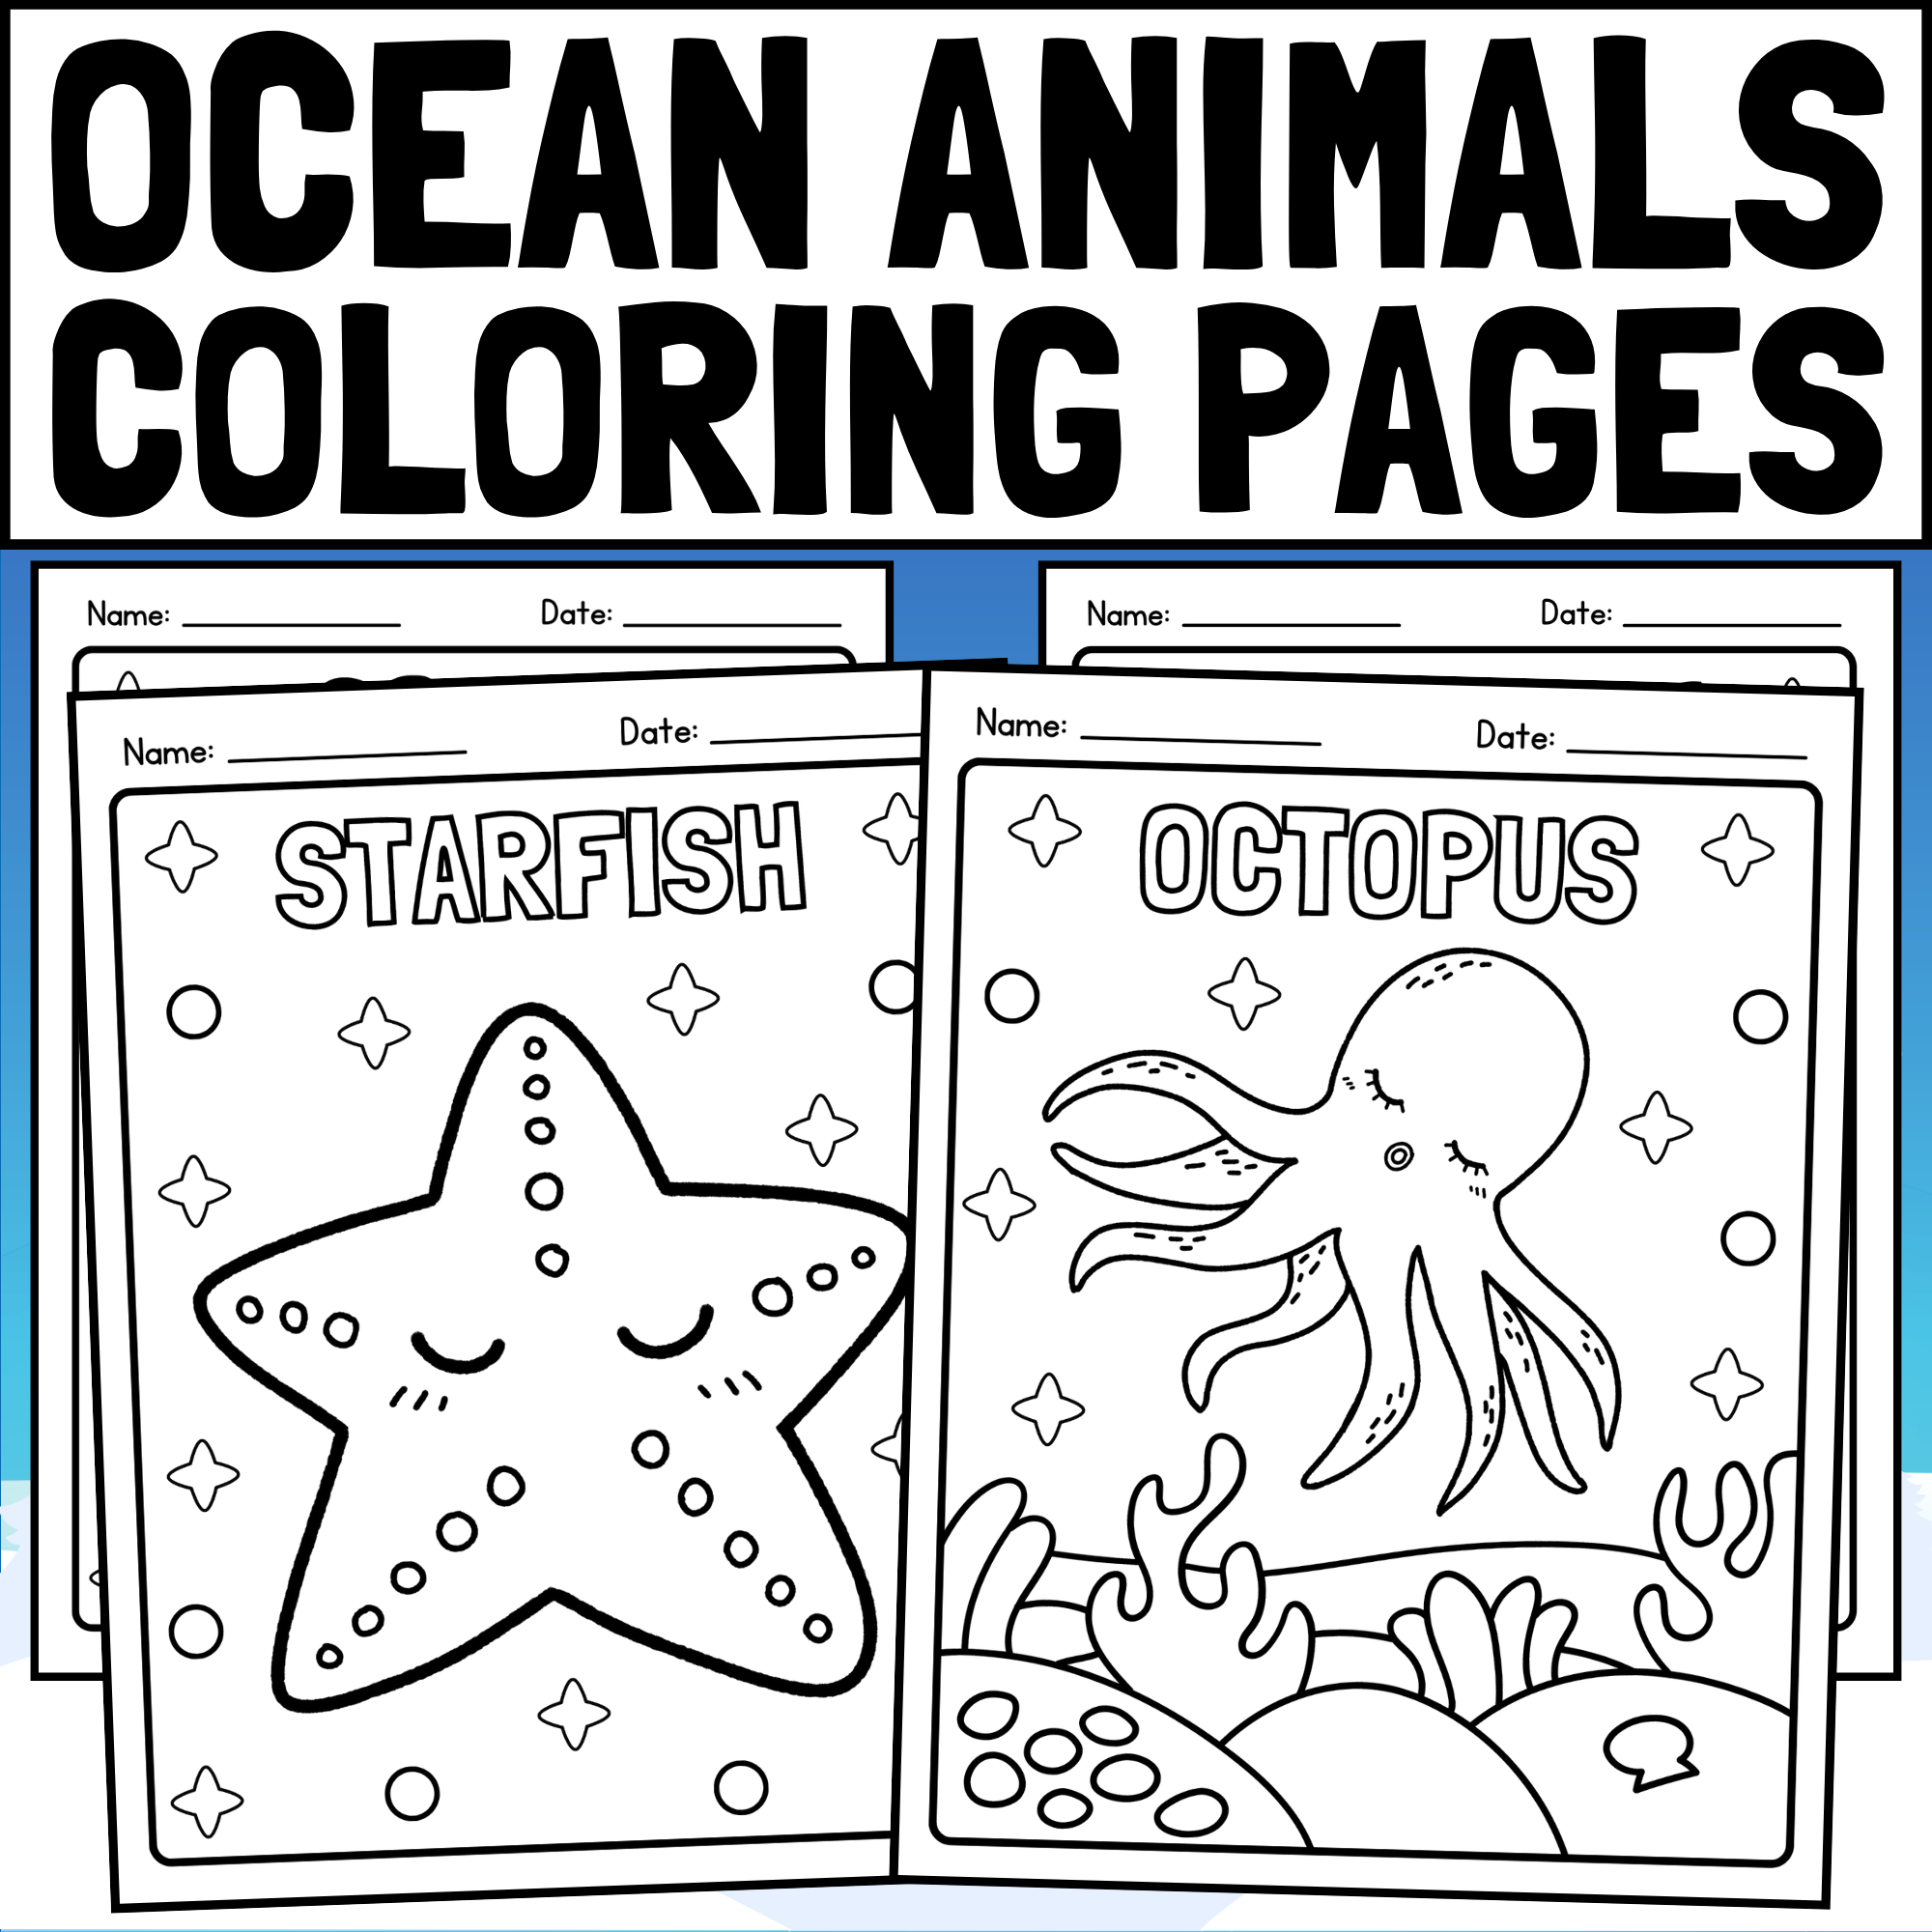 Ocean animals coloring pages ocean coloring sheets ocean coloring pages made by teachers